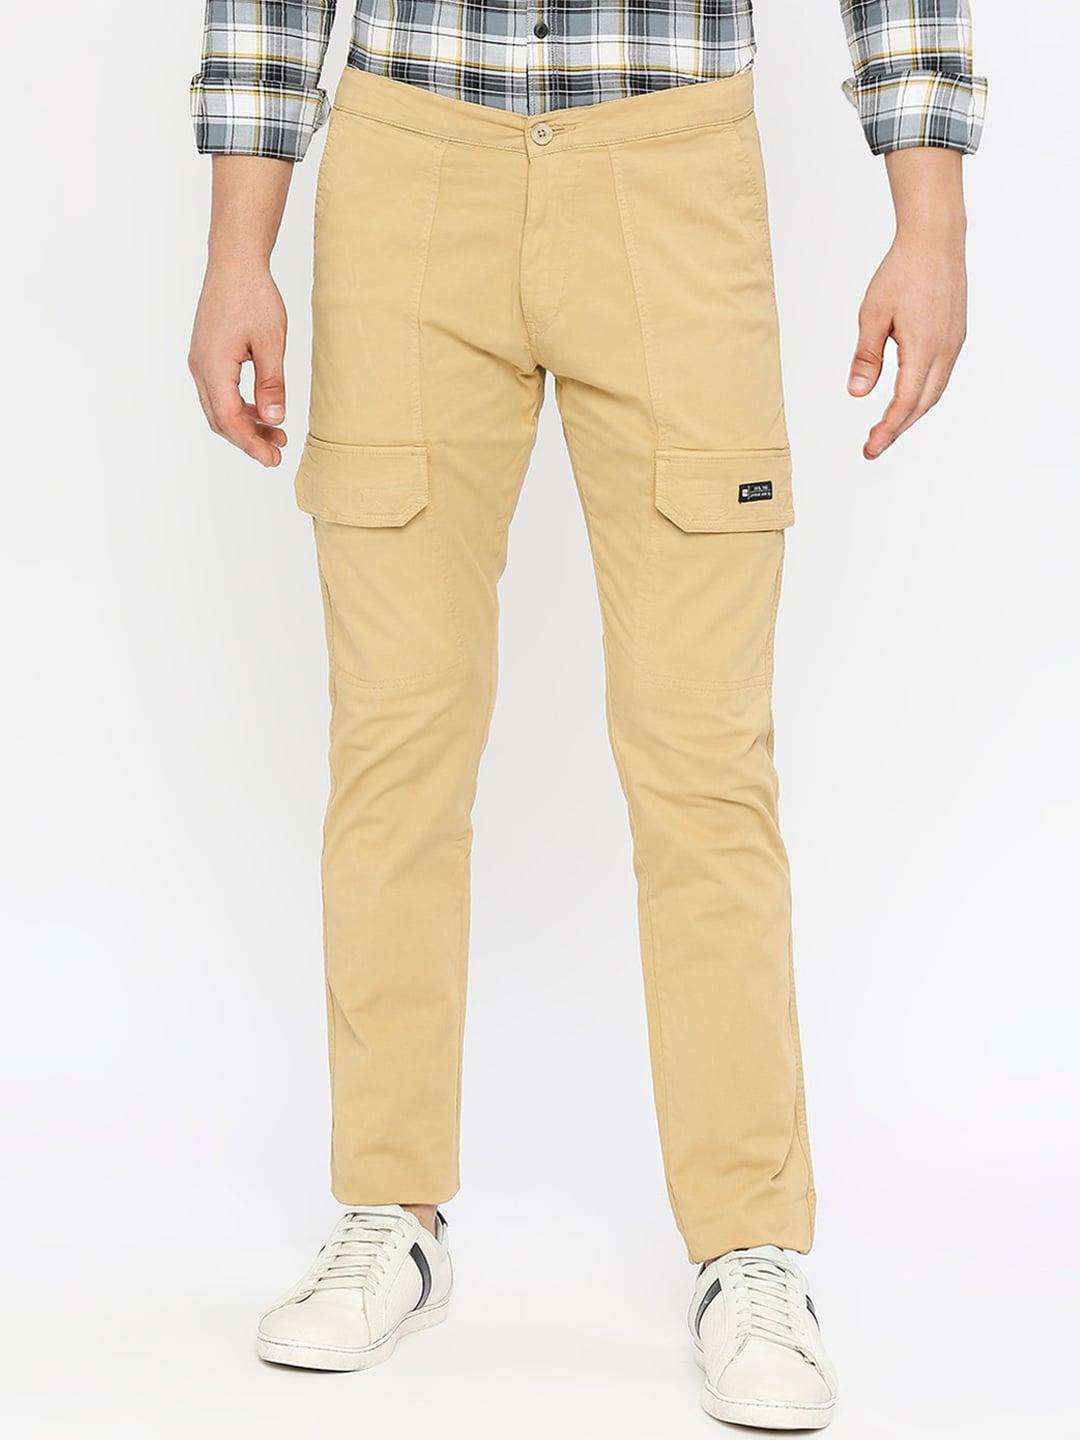 spykar-men-slim-fit-cotton-cargos-trousers